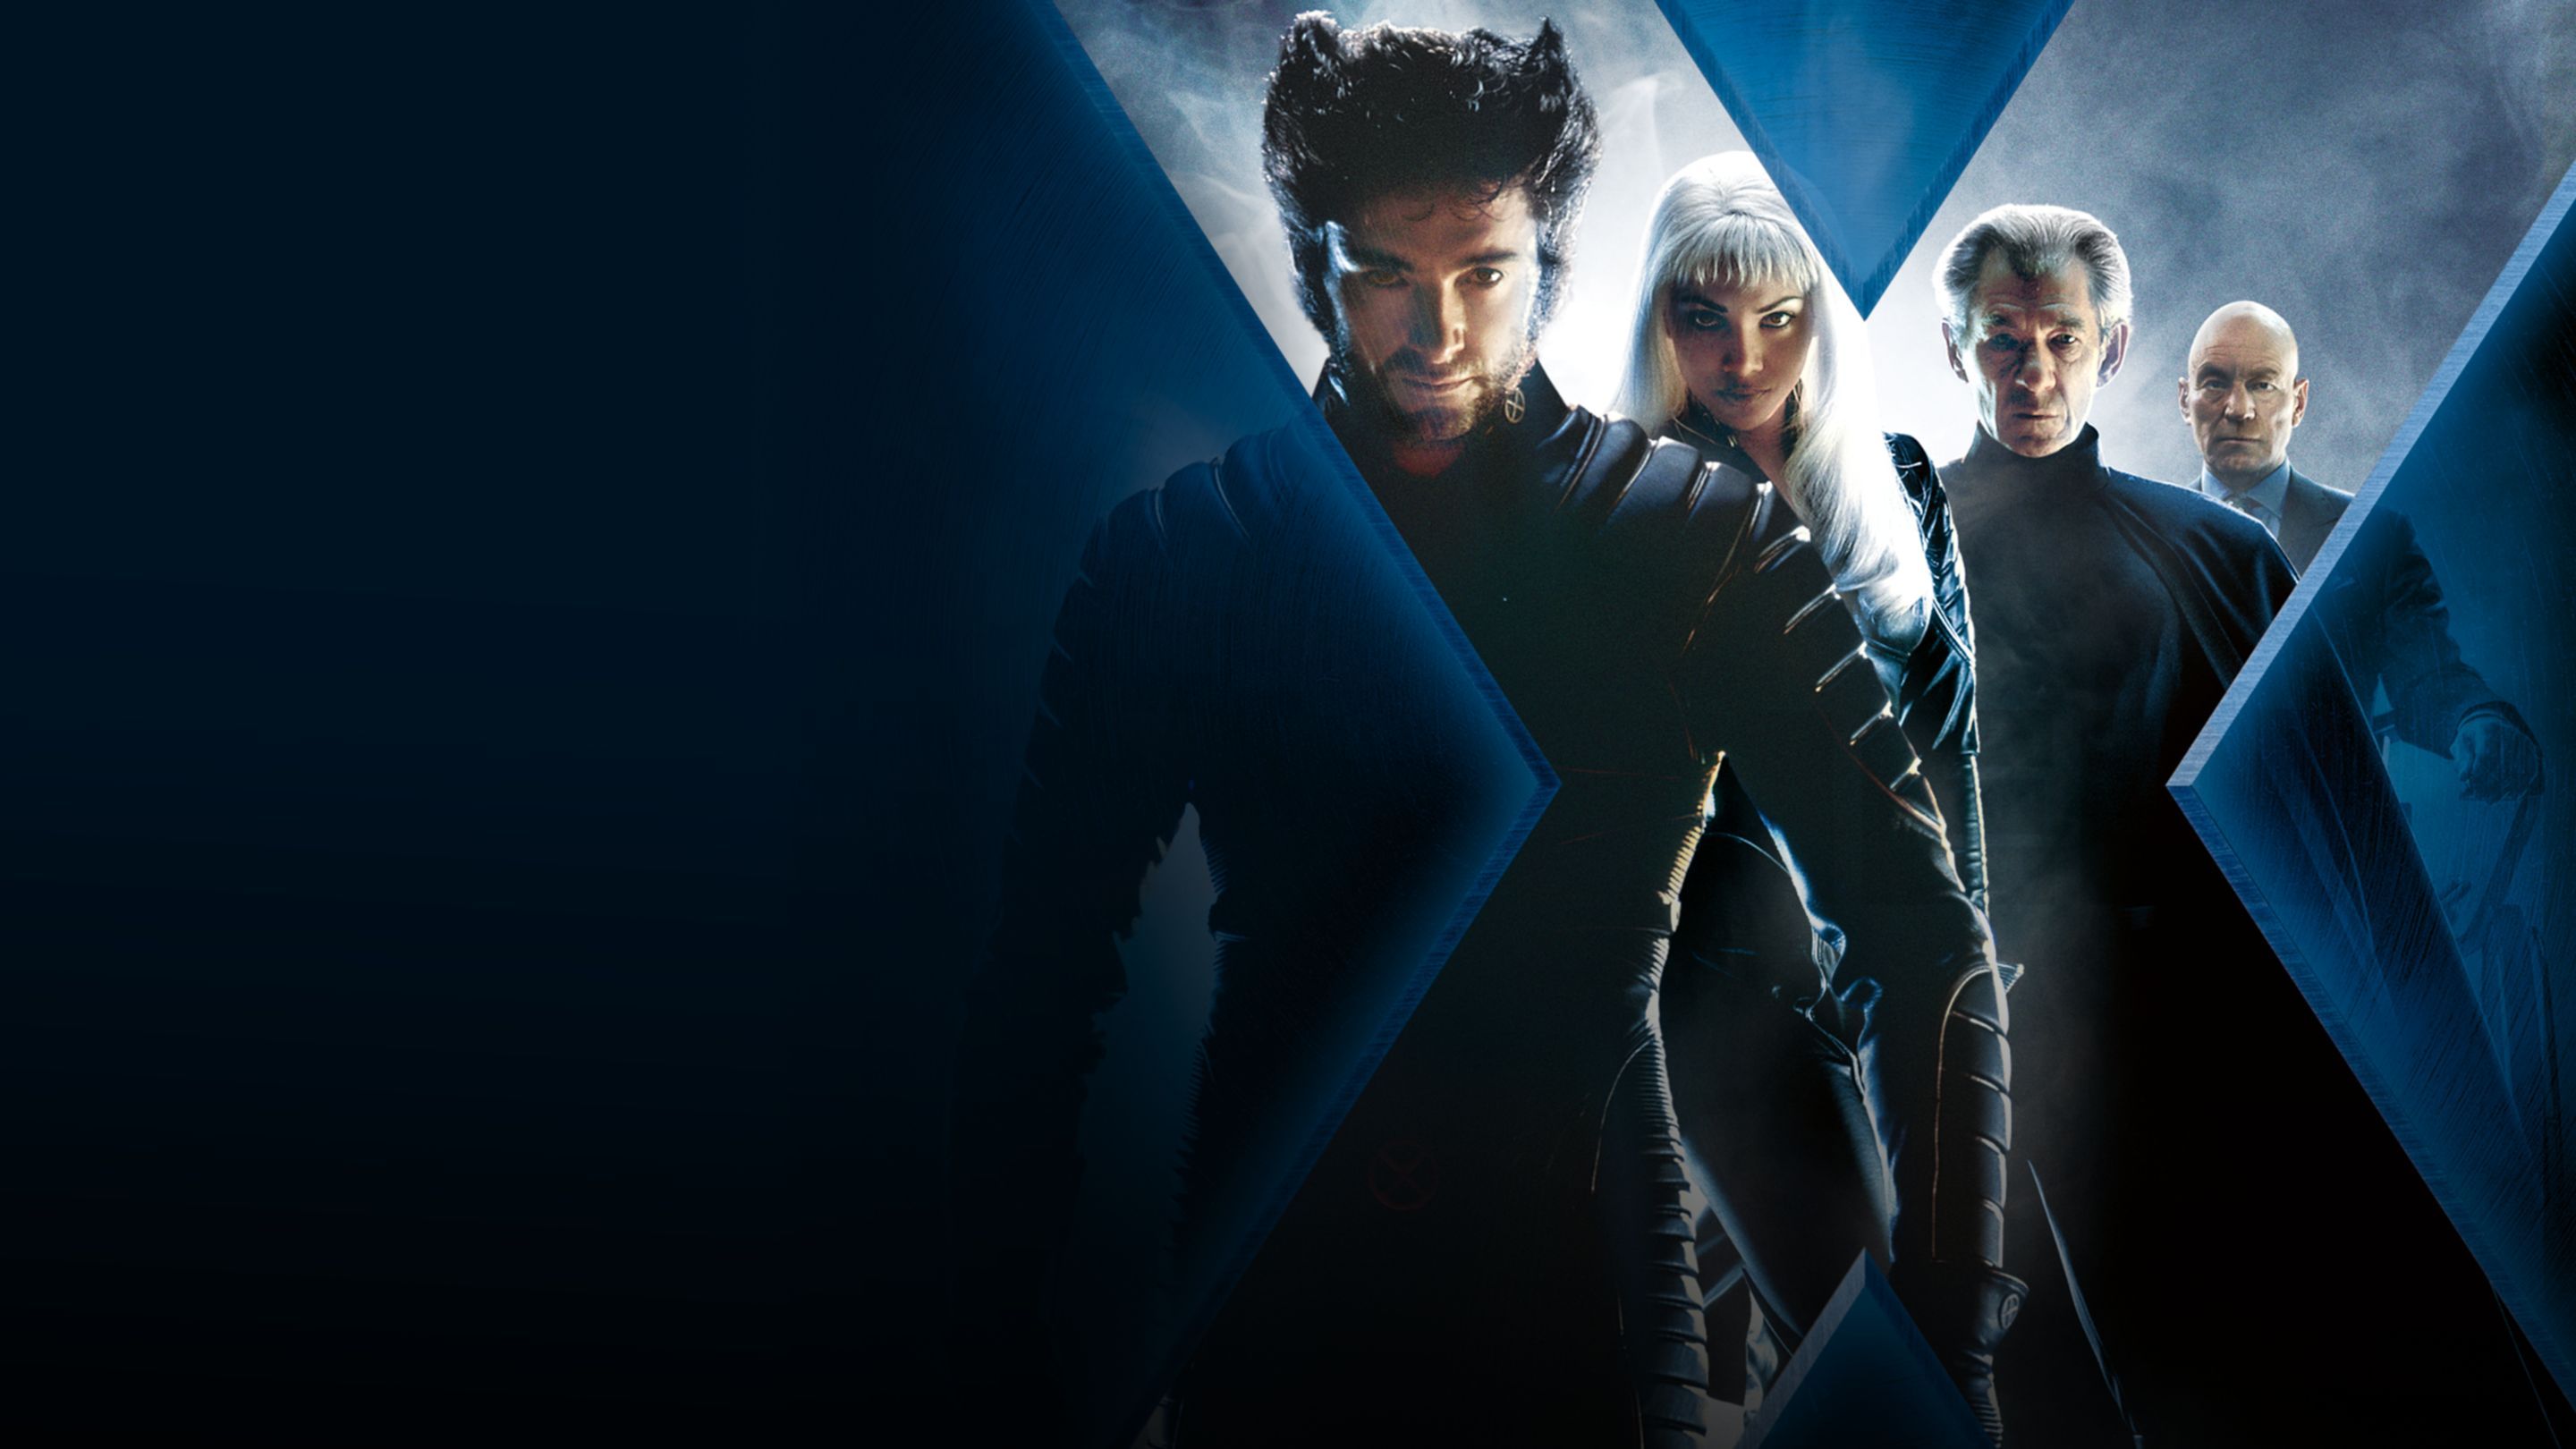 X-Men Full Movie